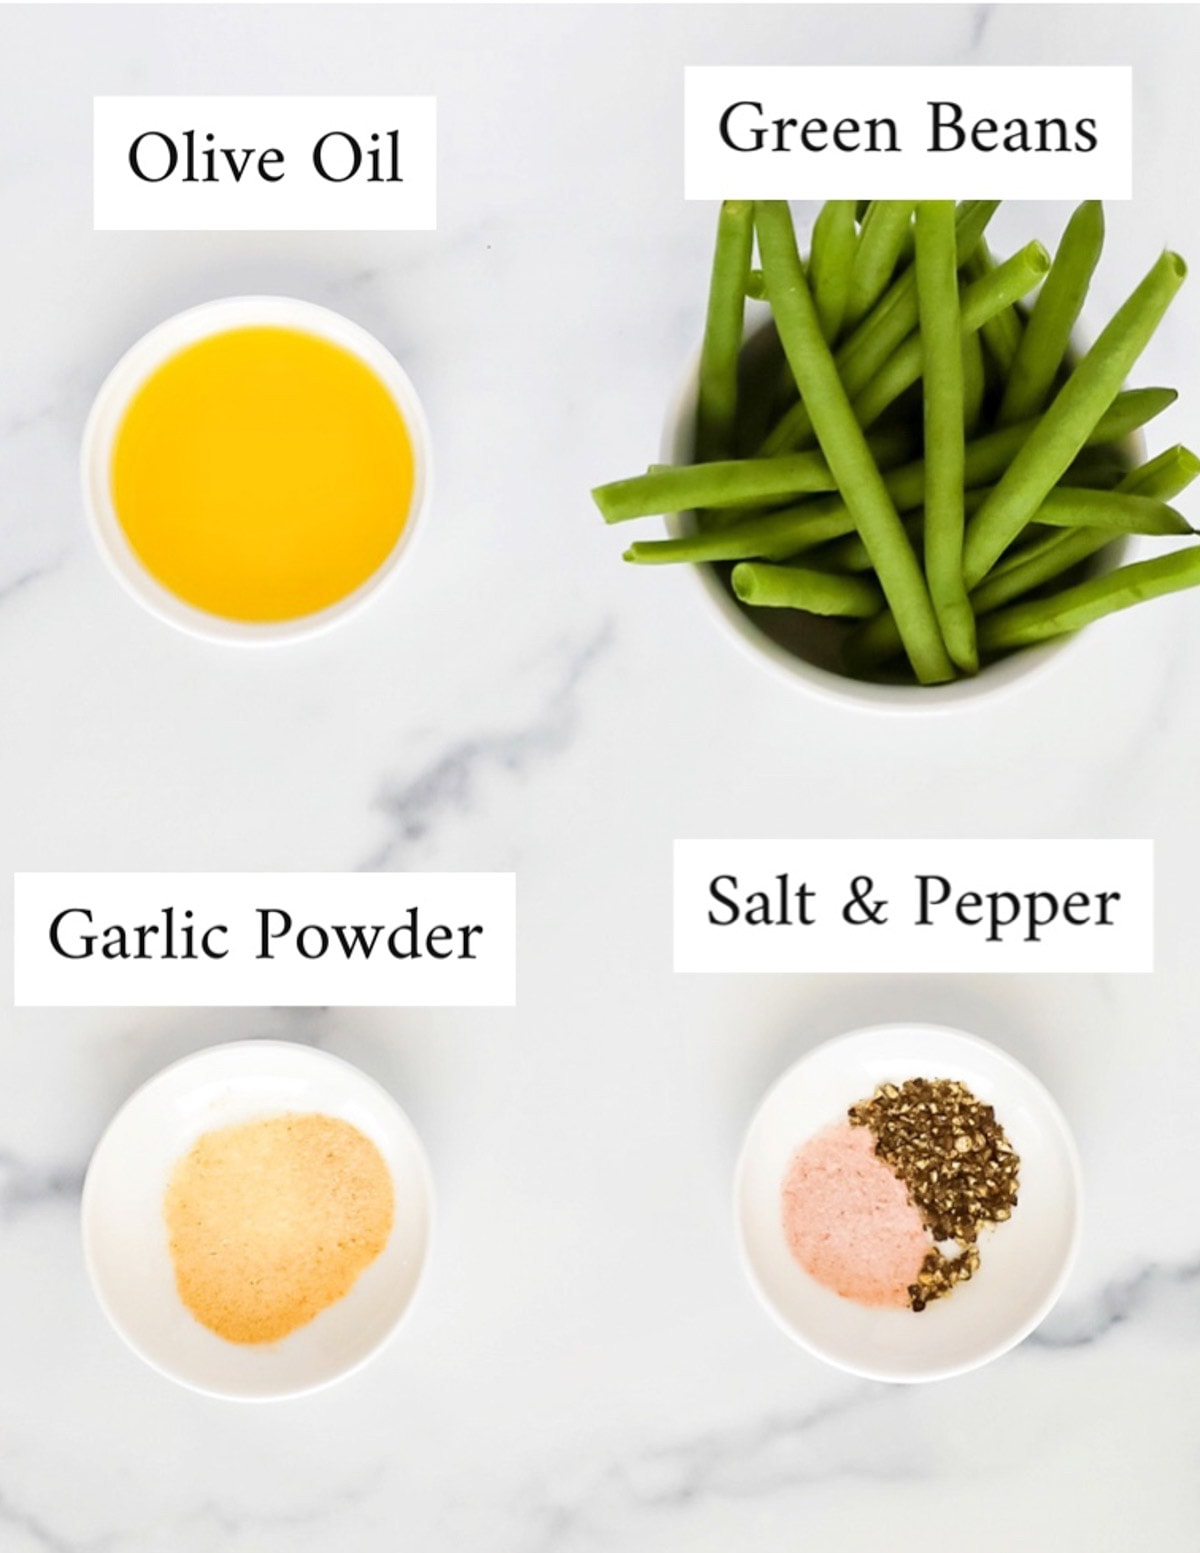 Labeled ingredients including: olive oil, green beans, garlic powder, salt & pepper